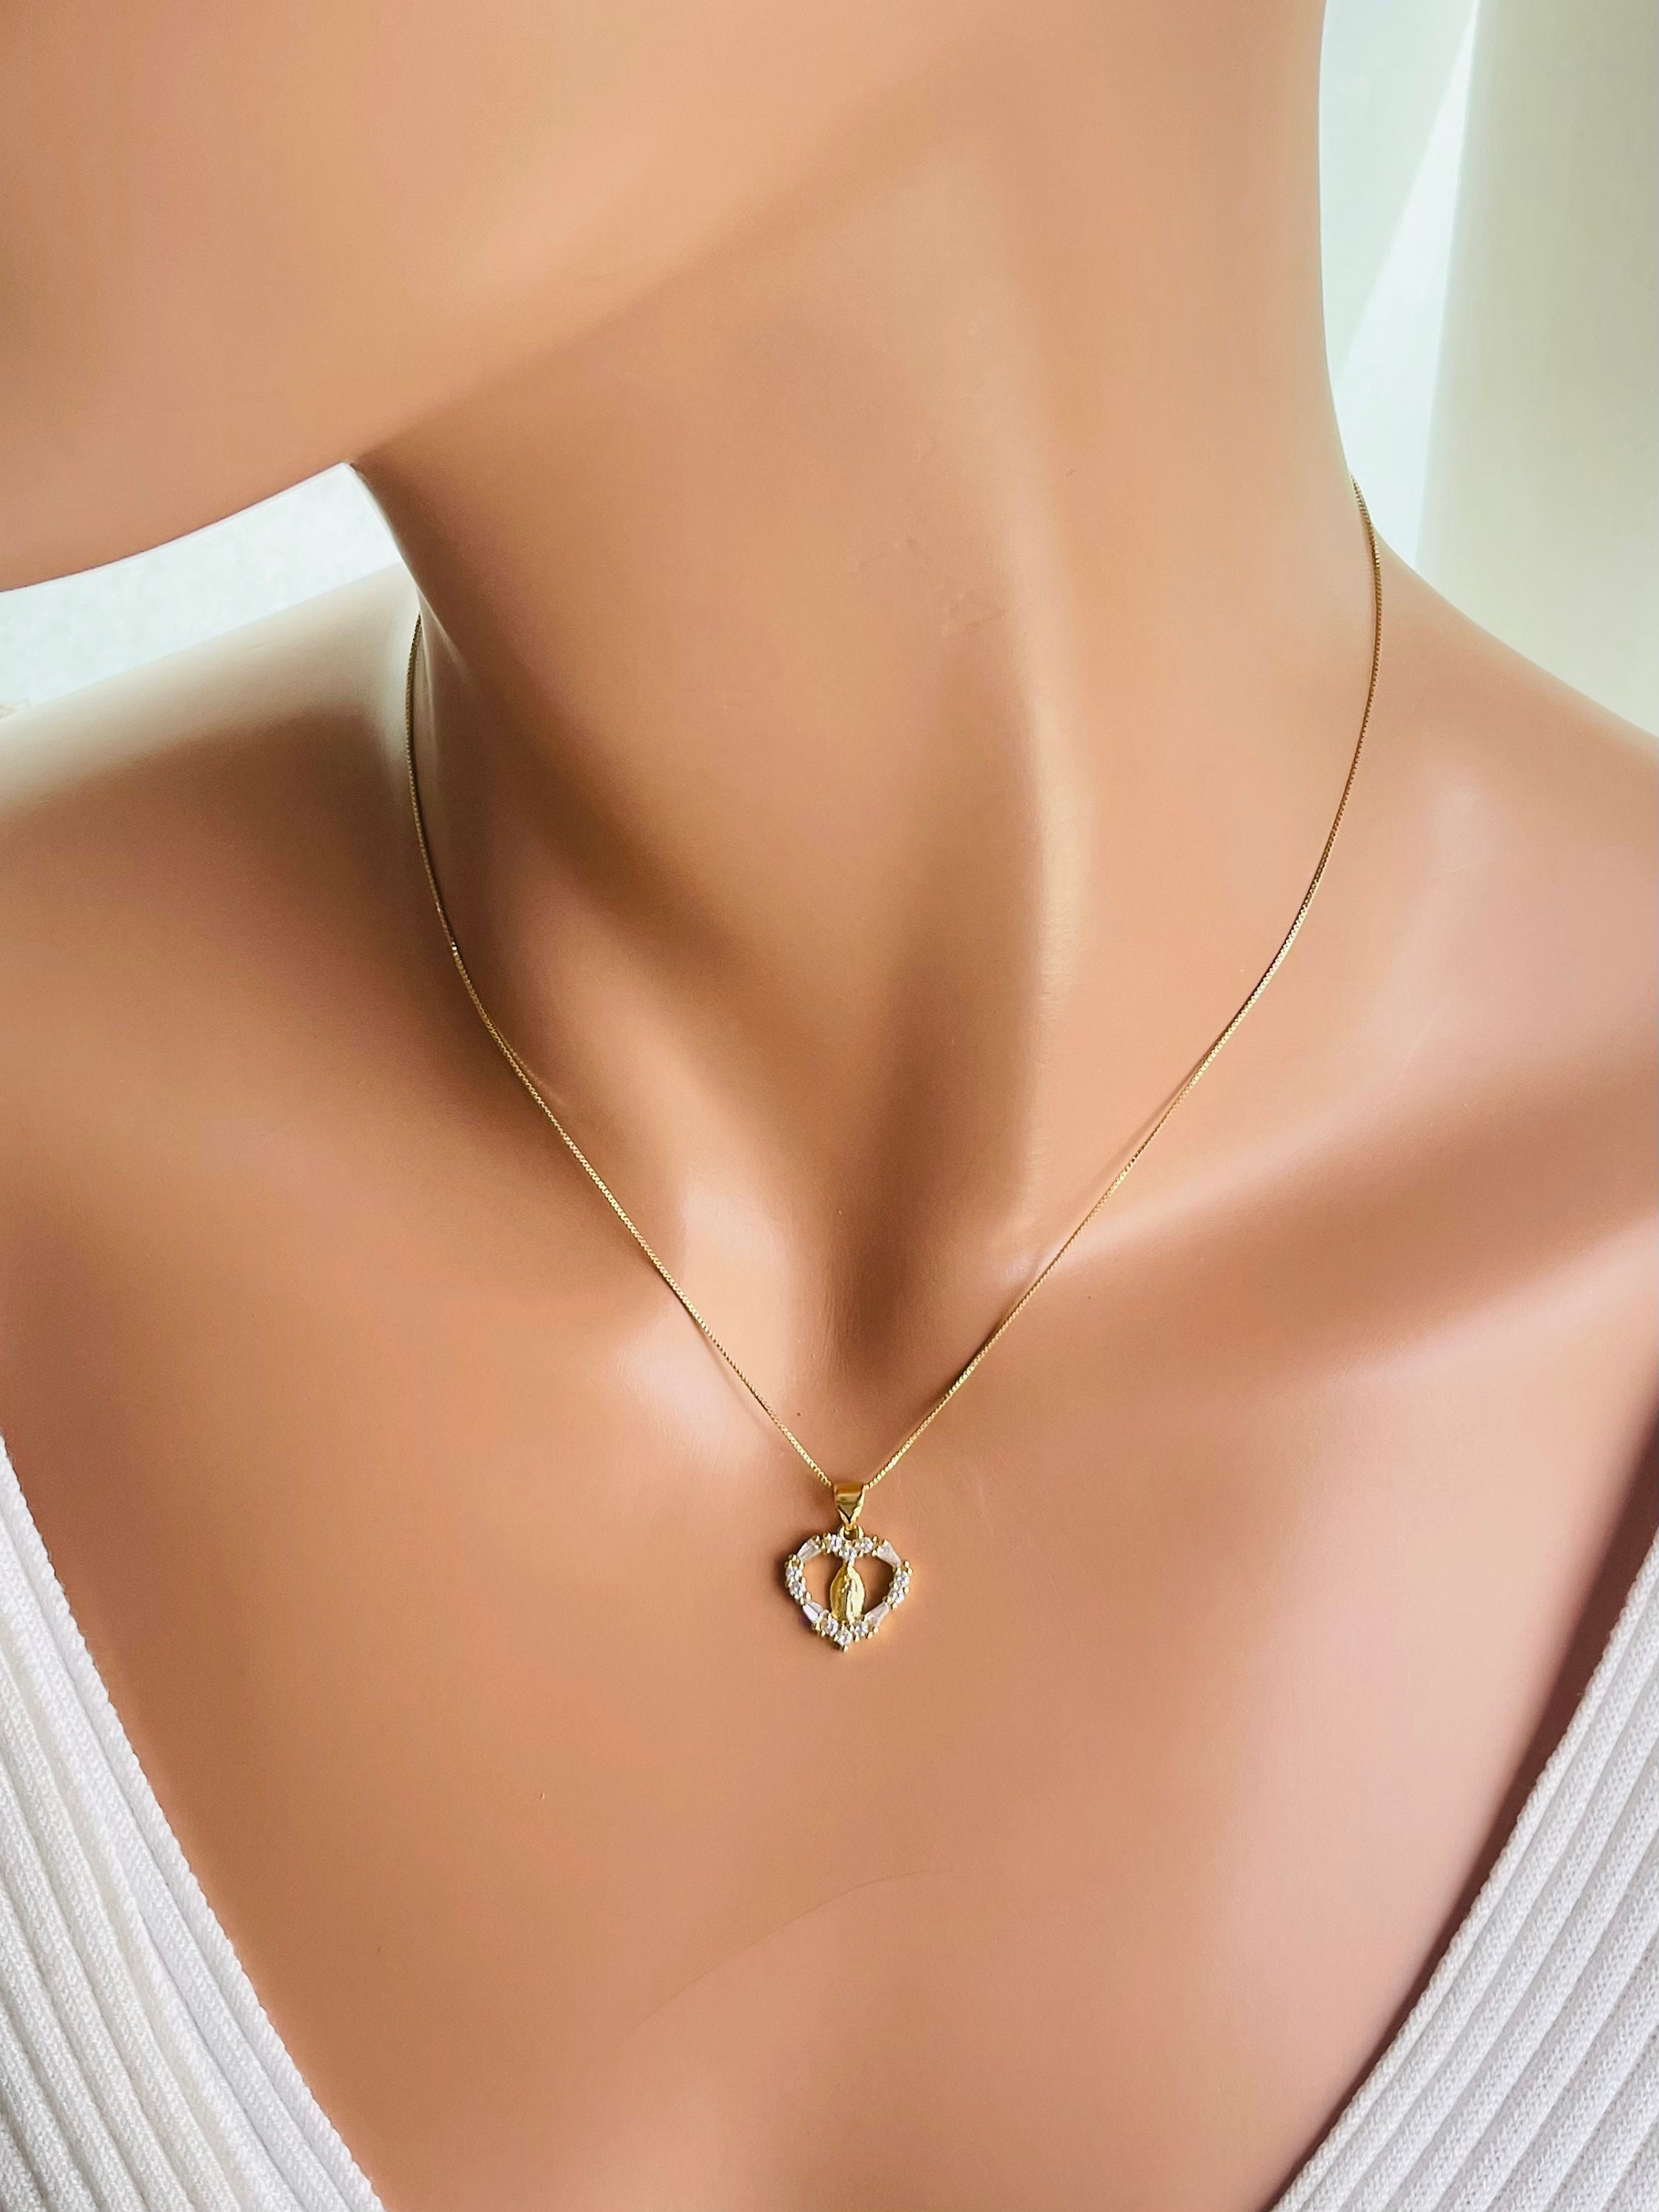 Tiny Pave Key Charm Necklace. Glass Vial Display – l. rae jewelry